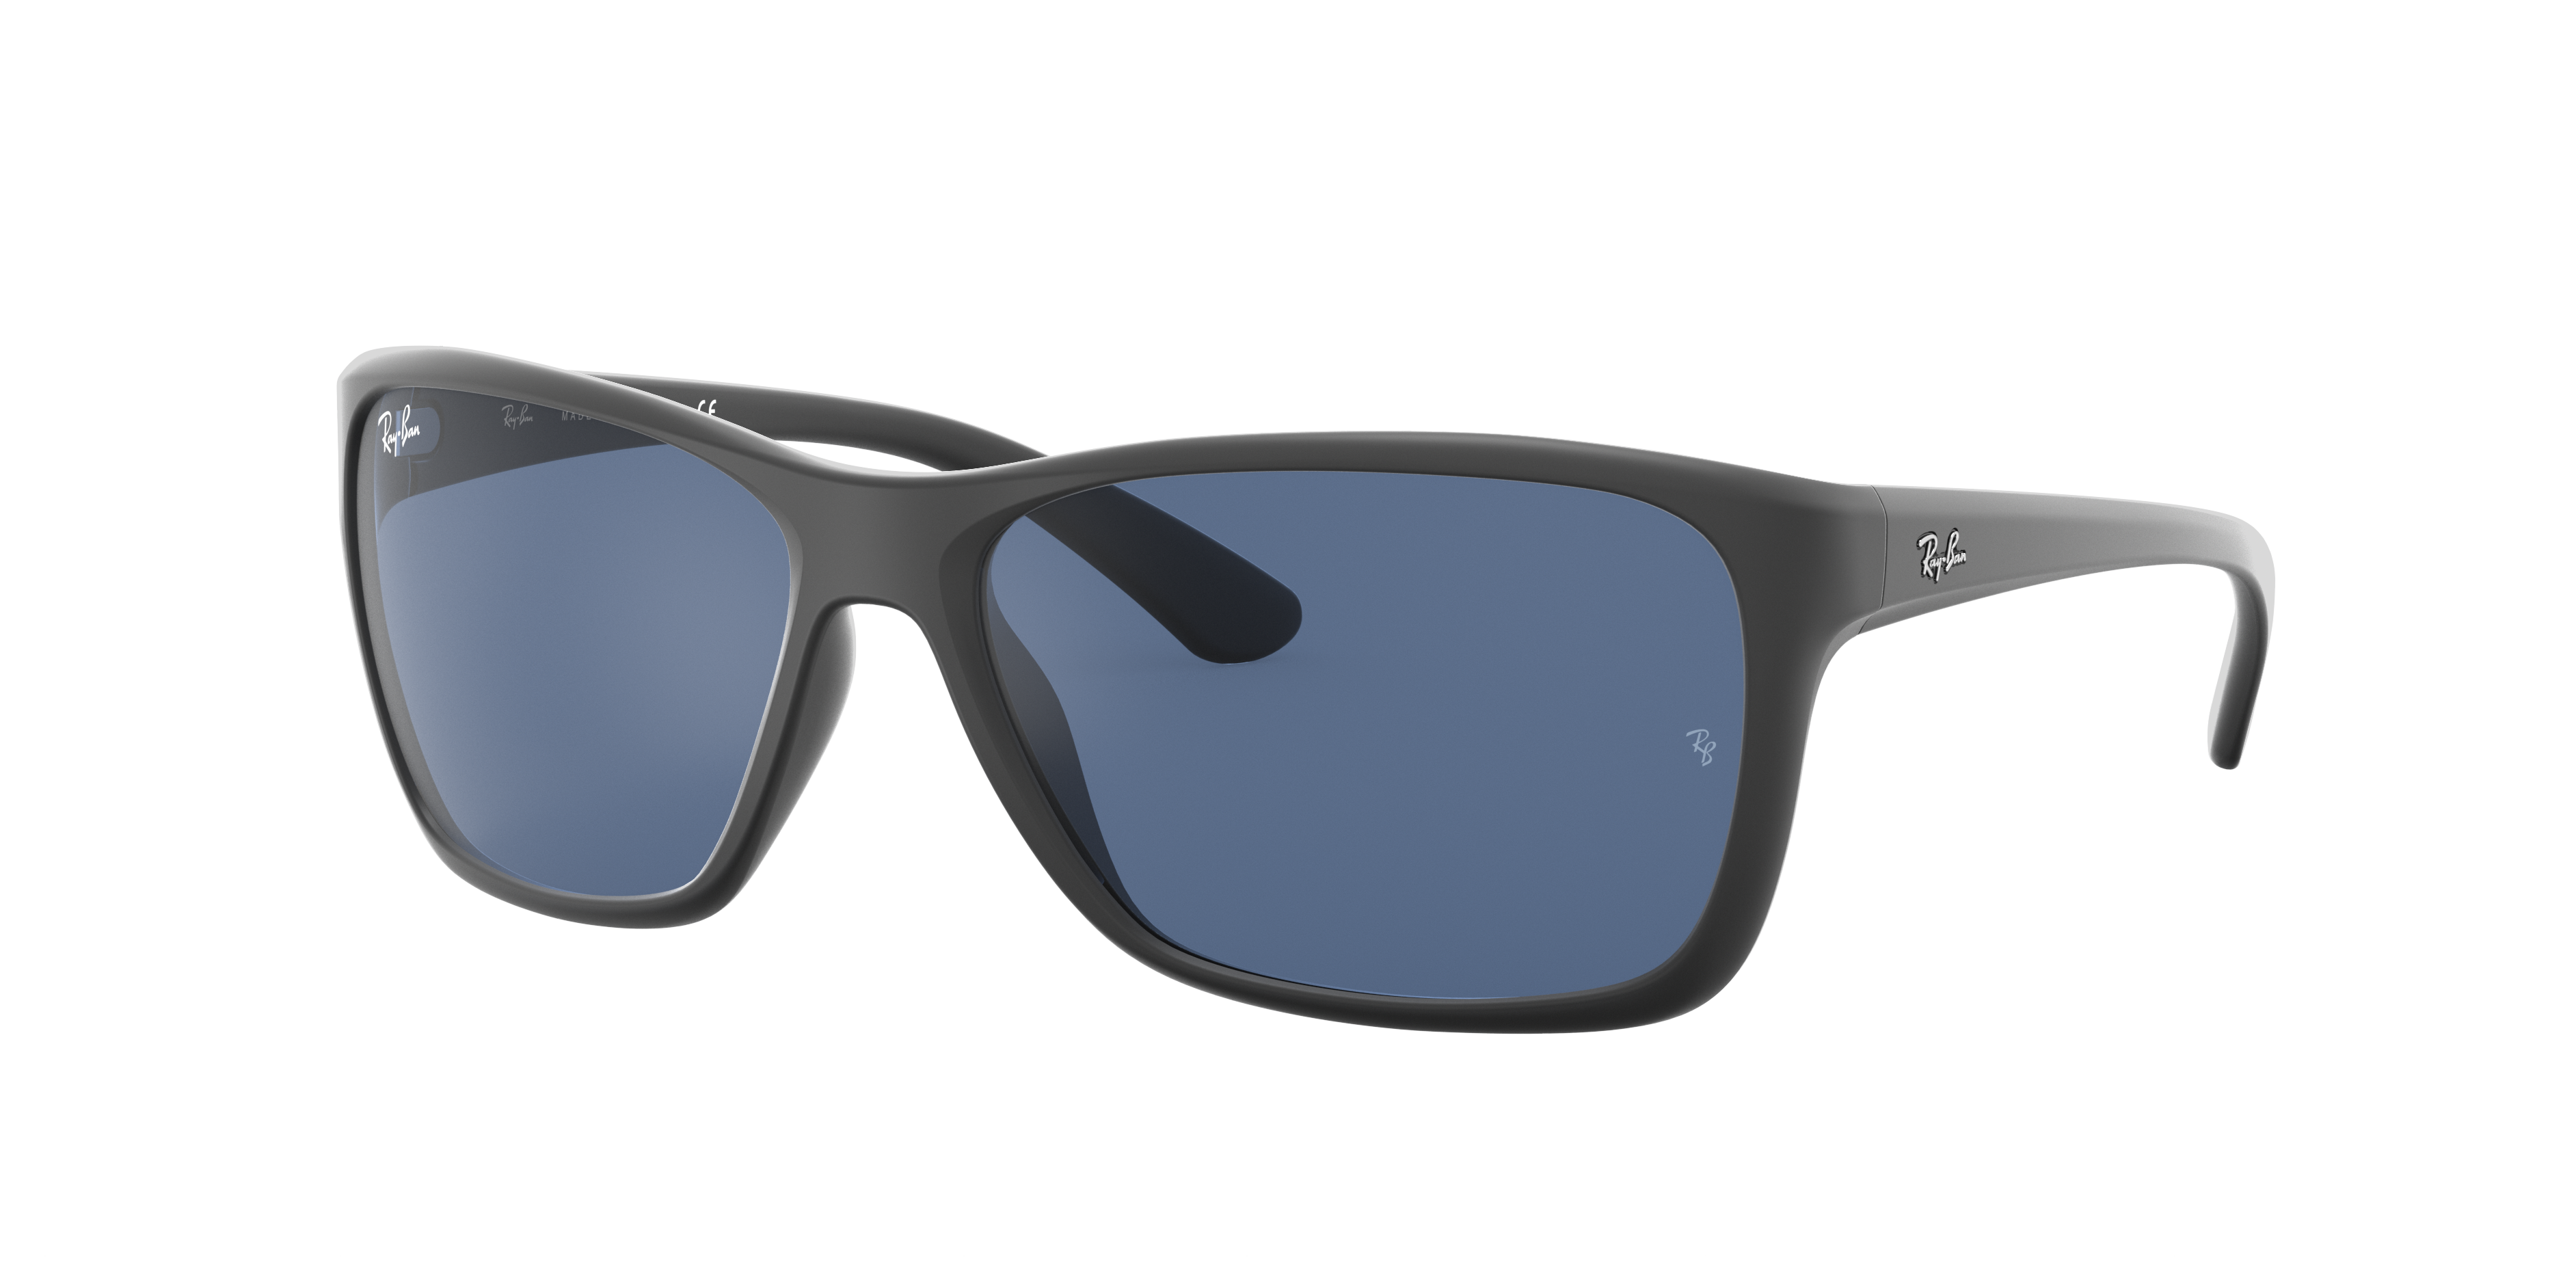 Shipley Boodschapper Specimen Rb4331 Sunglasses in Black and Dark Blue | Ray-Ban®